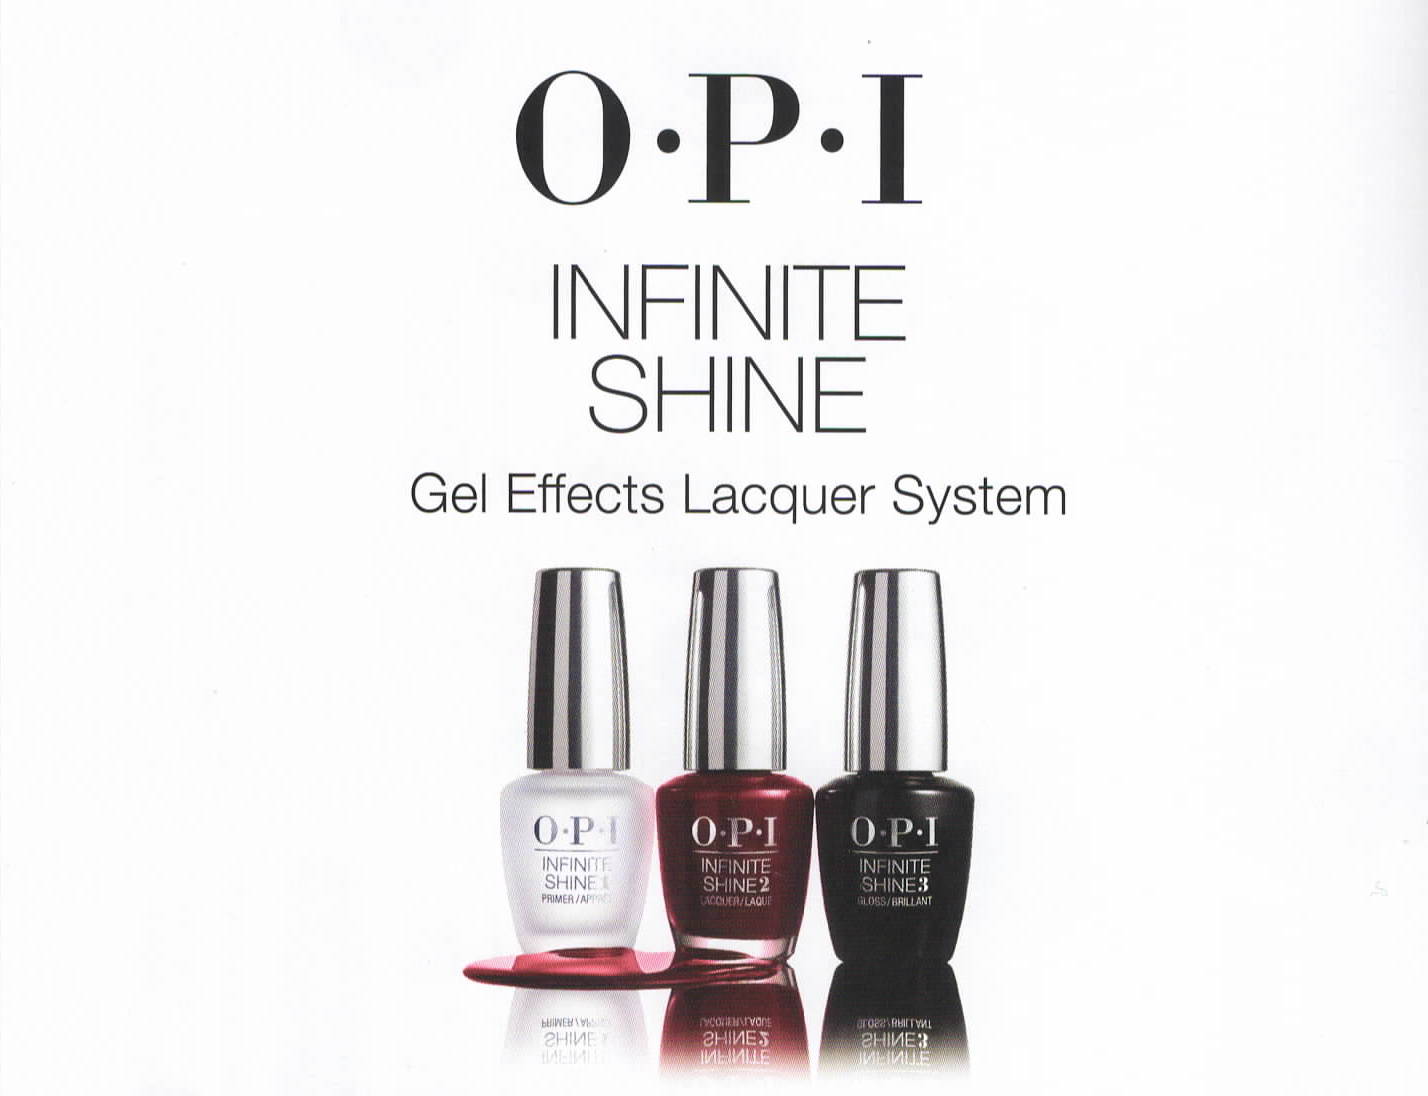 OPI Infinite Shine